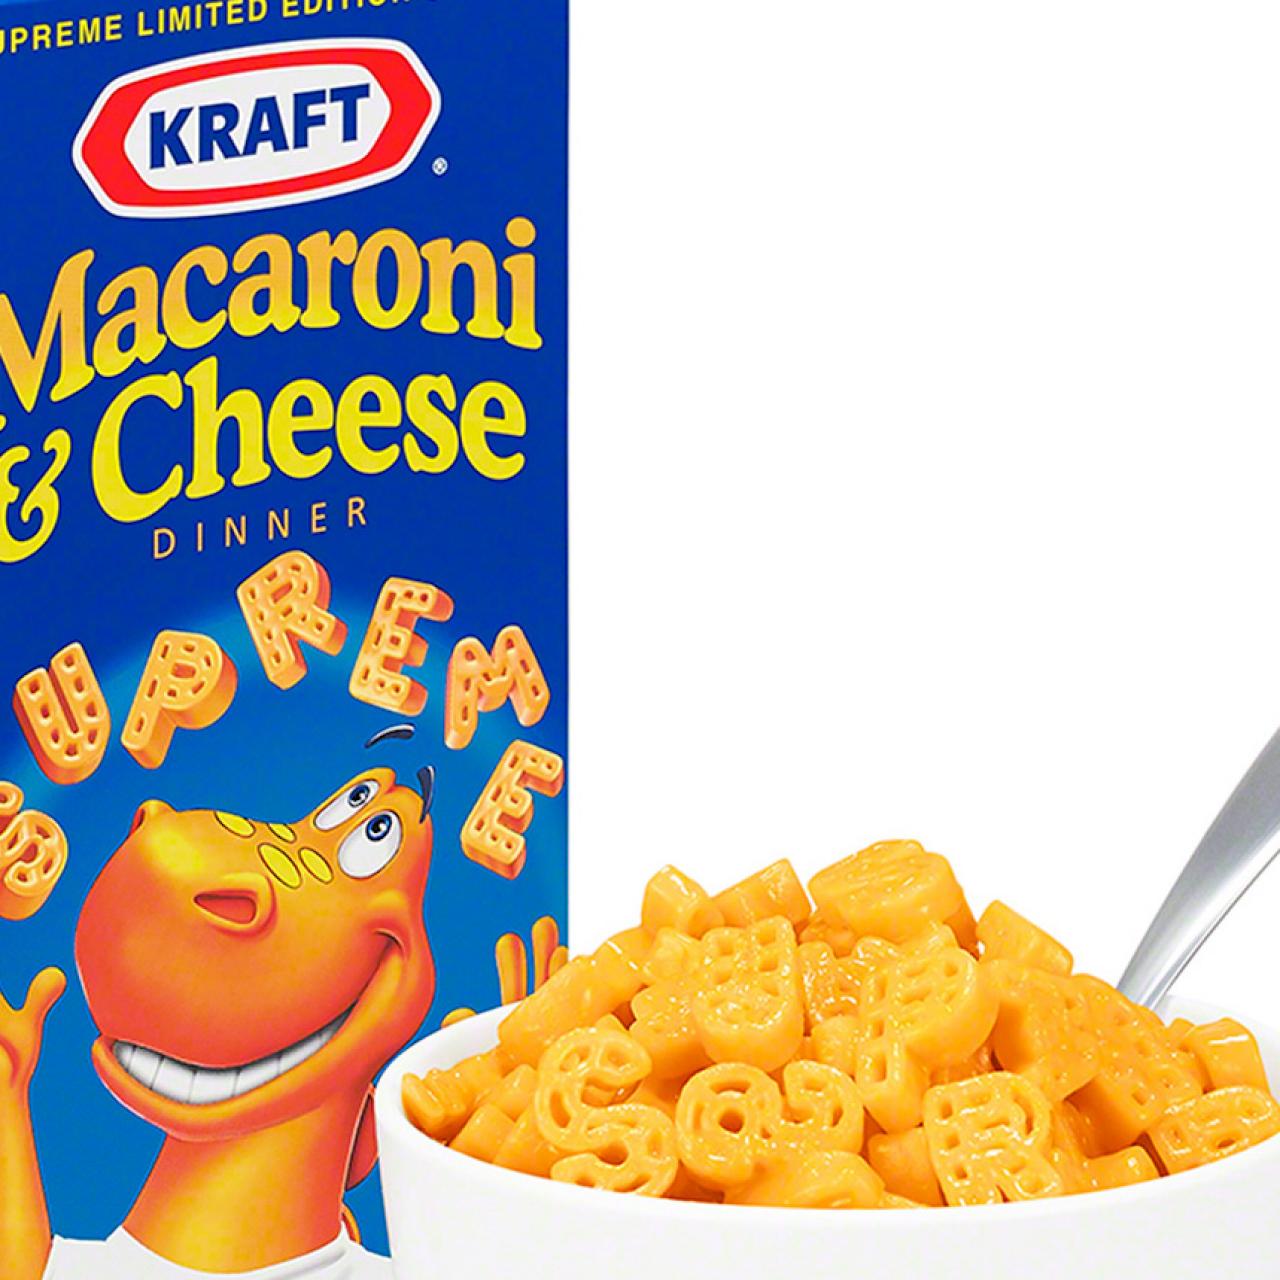 kraft macaroni and cheese shapes